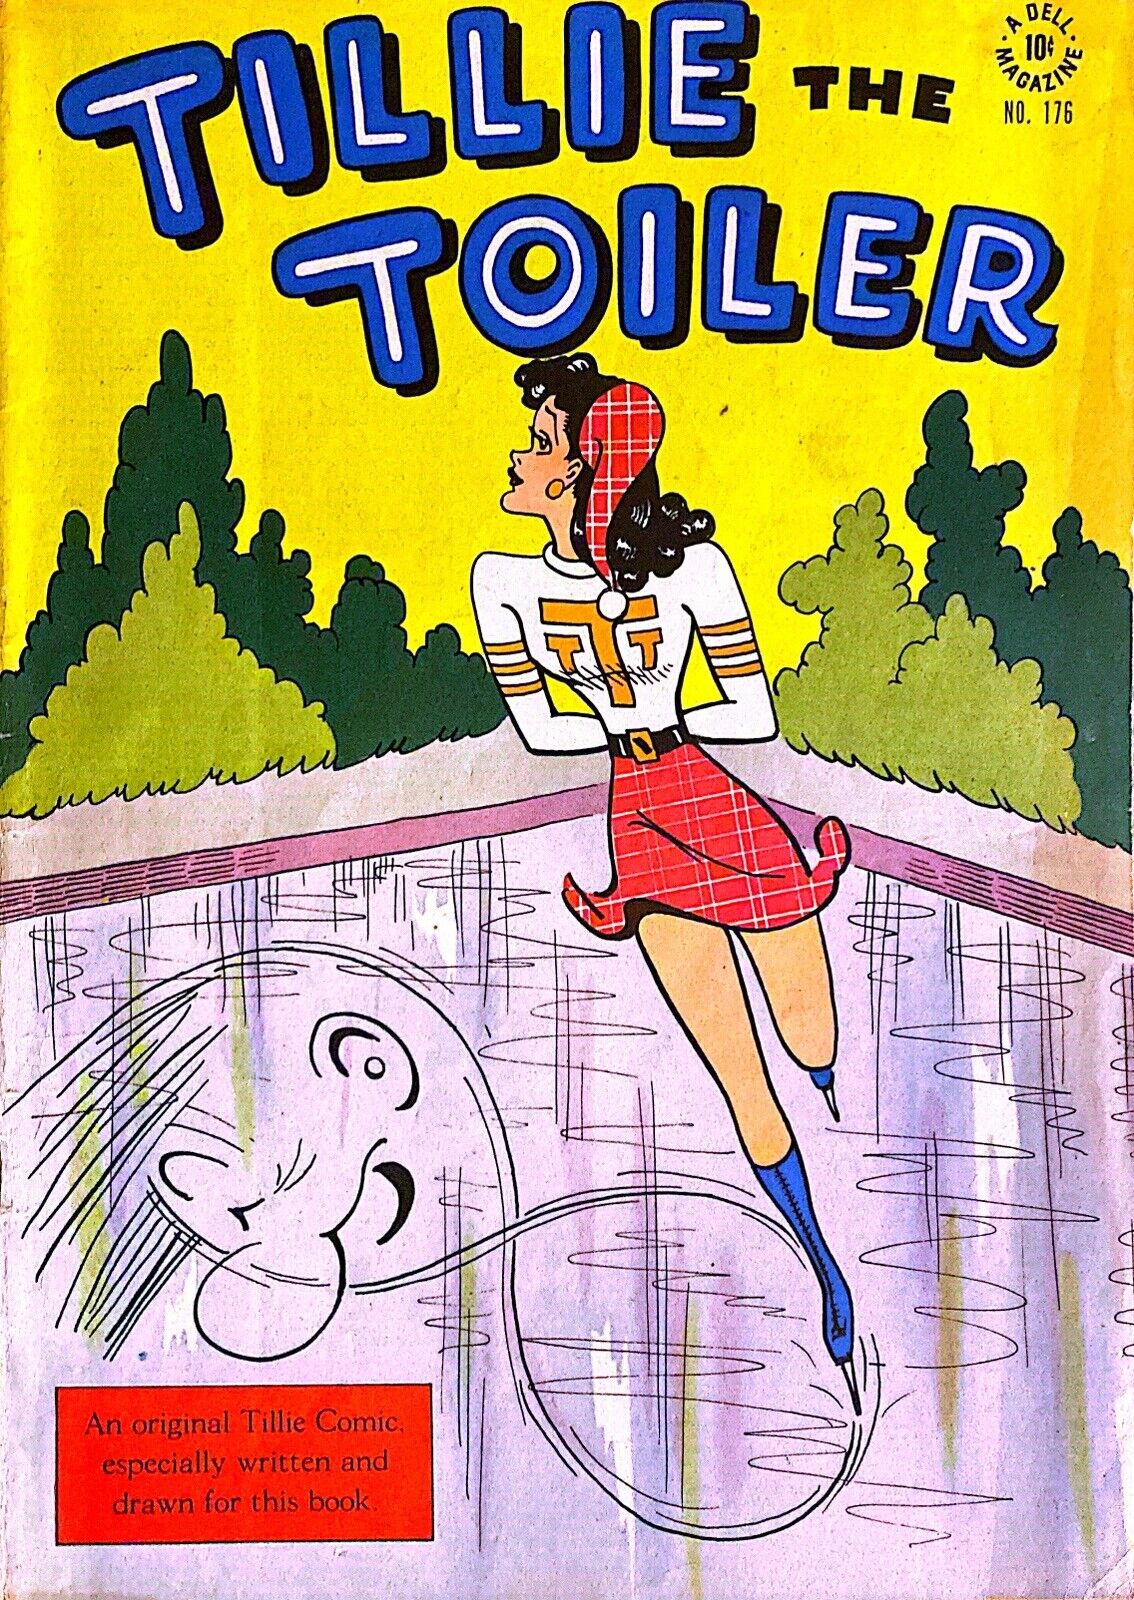 Tillie The Toiler #176 (1947) - Very Good (4.0)